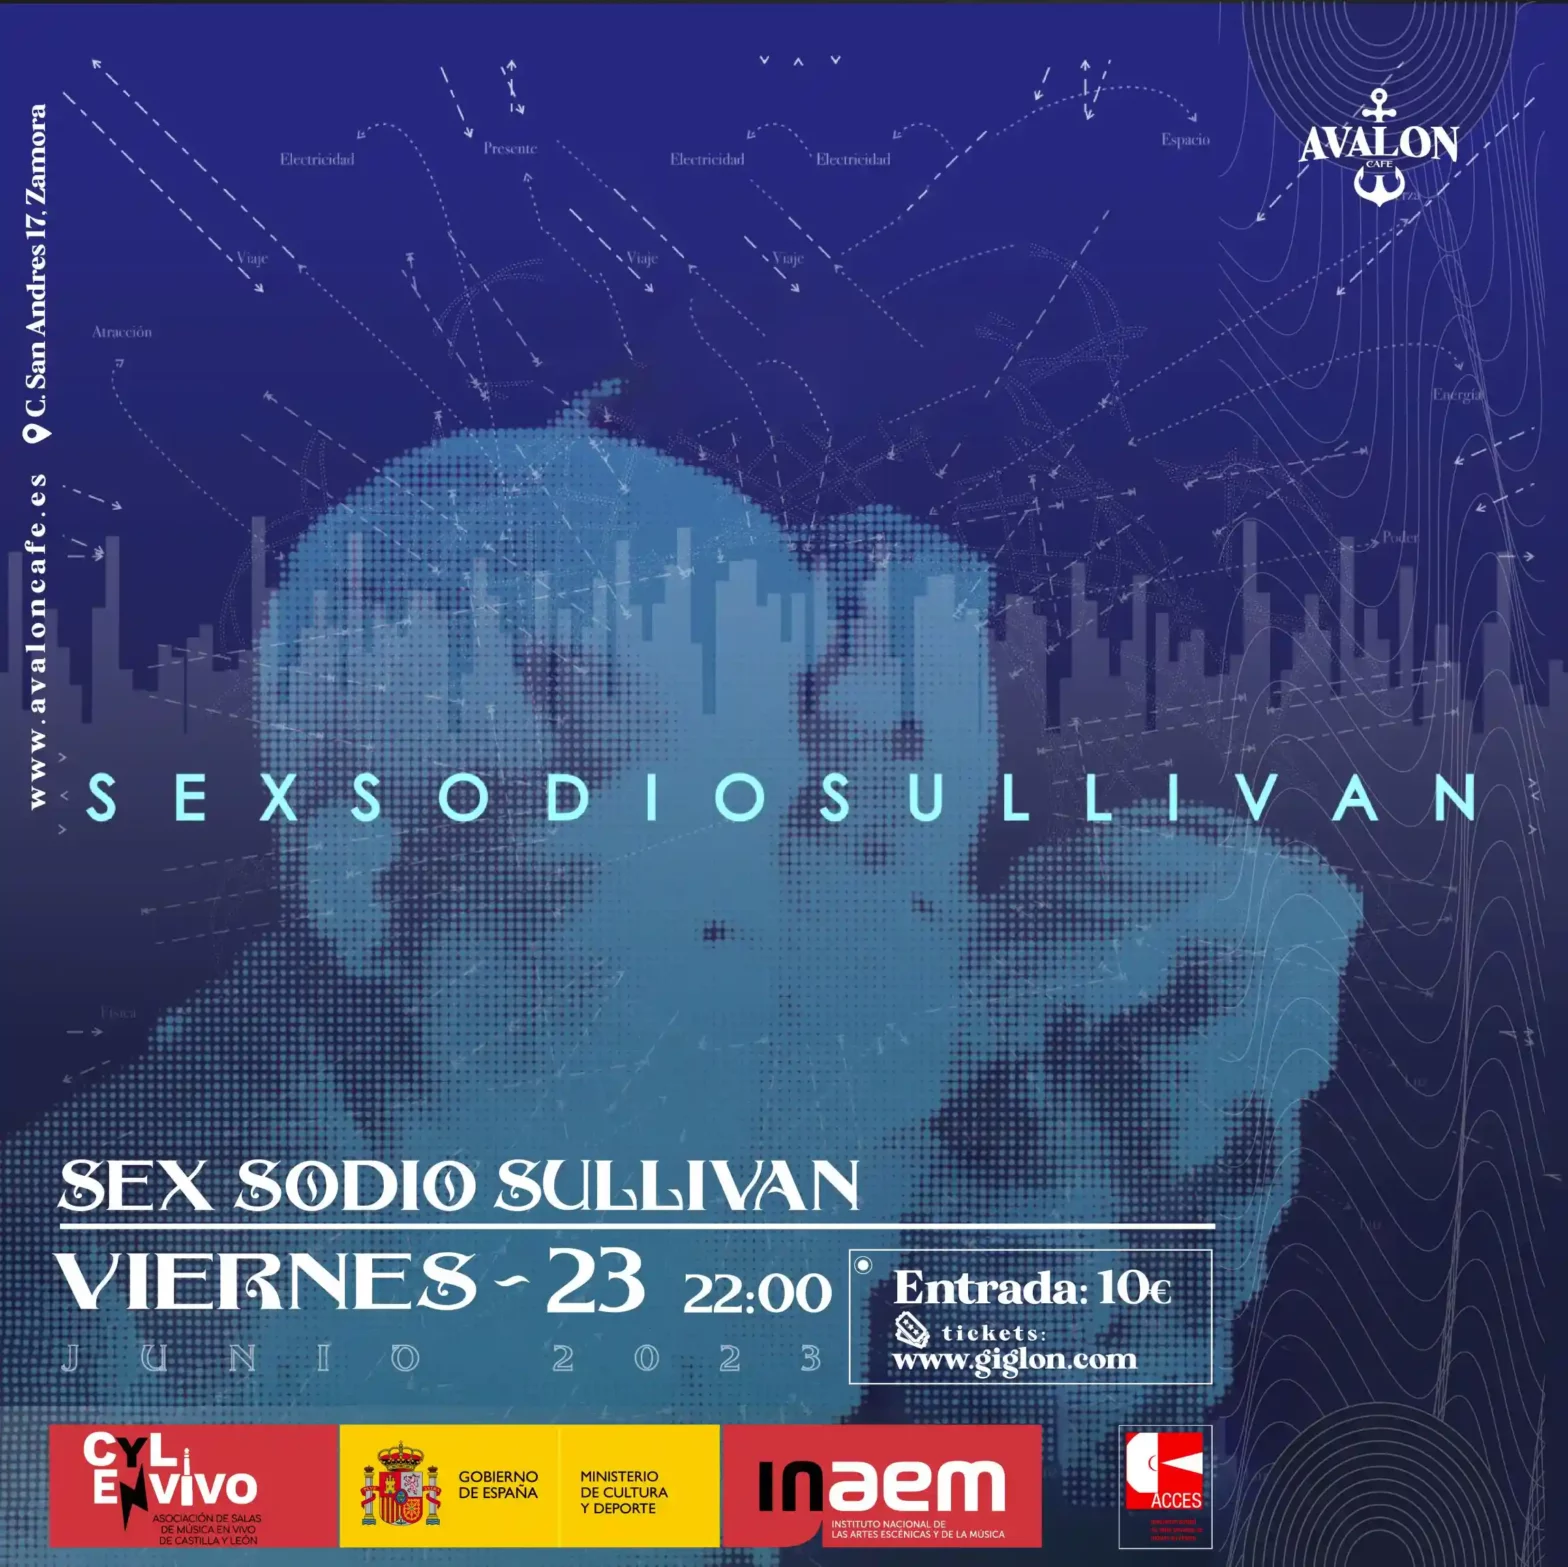 Artista Sex Sodio Sullivan presentacion en el avalon cafe bar